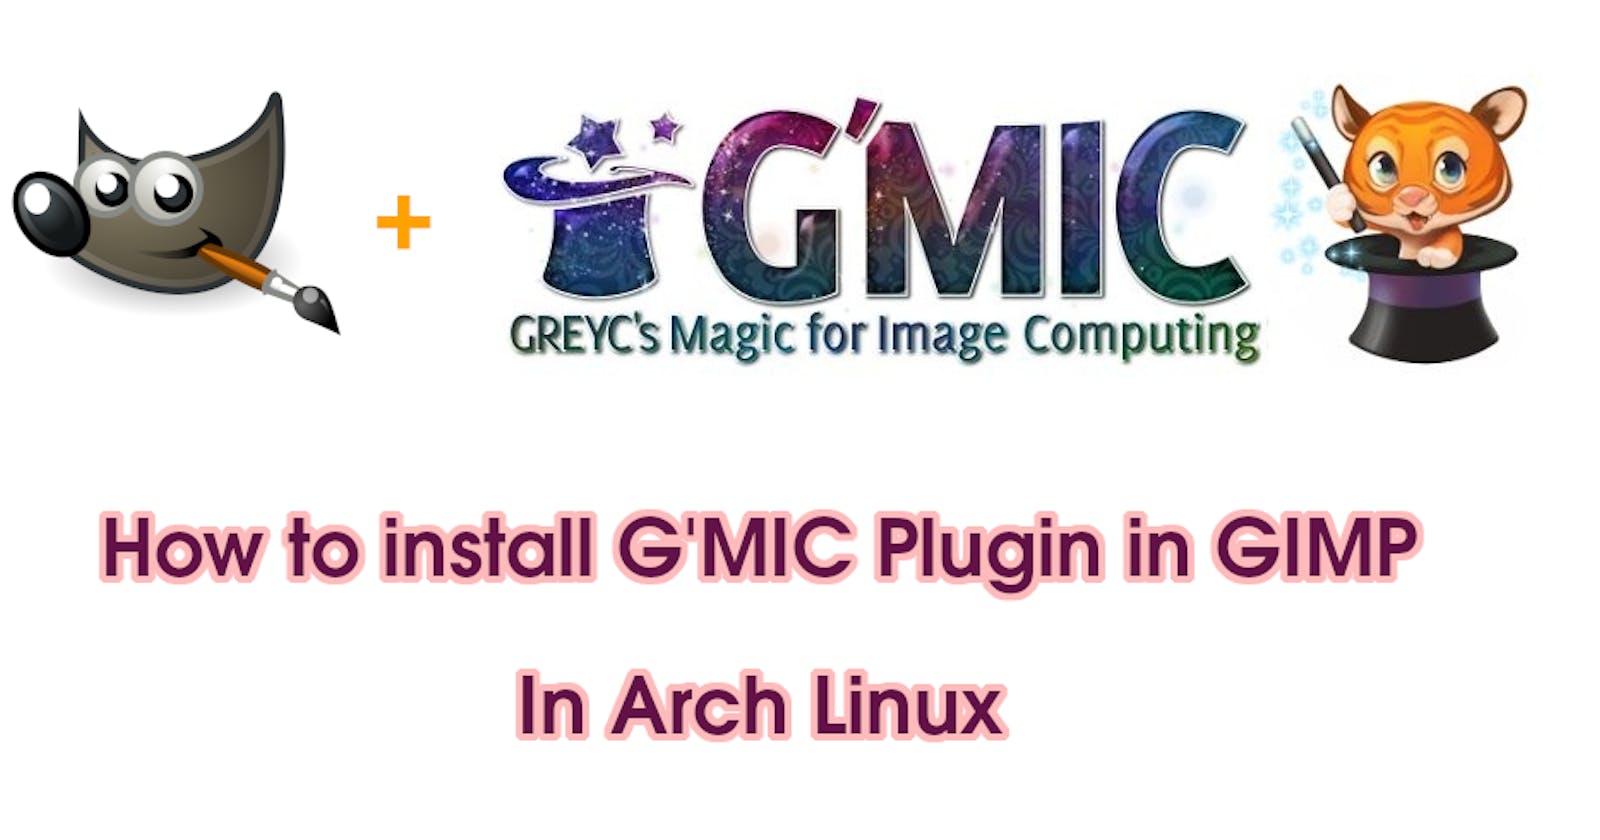 Installing G'MIC Plugin in GIMP in Arch Linux